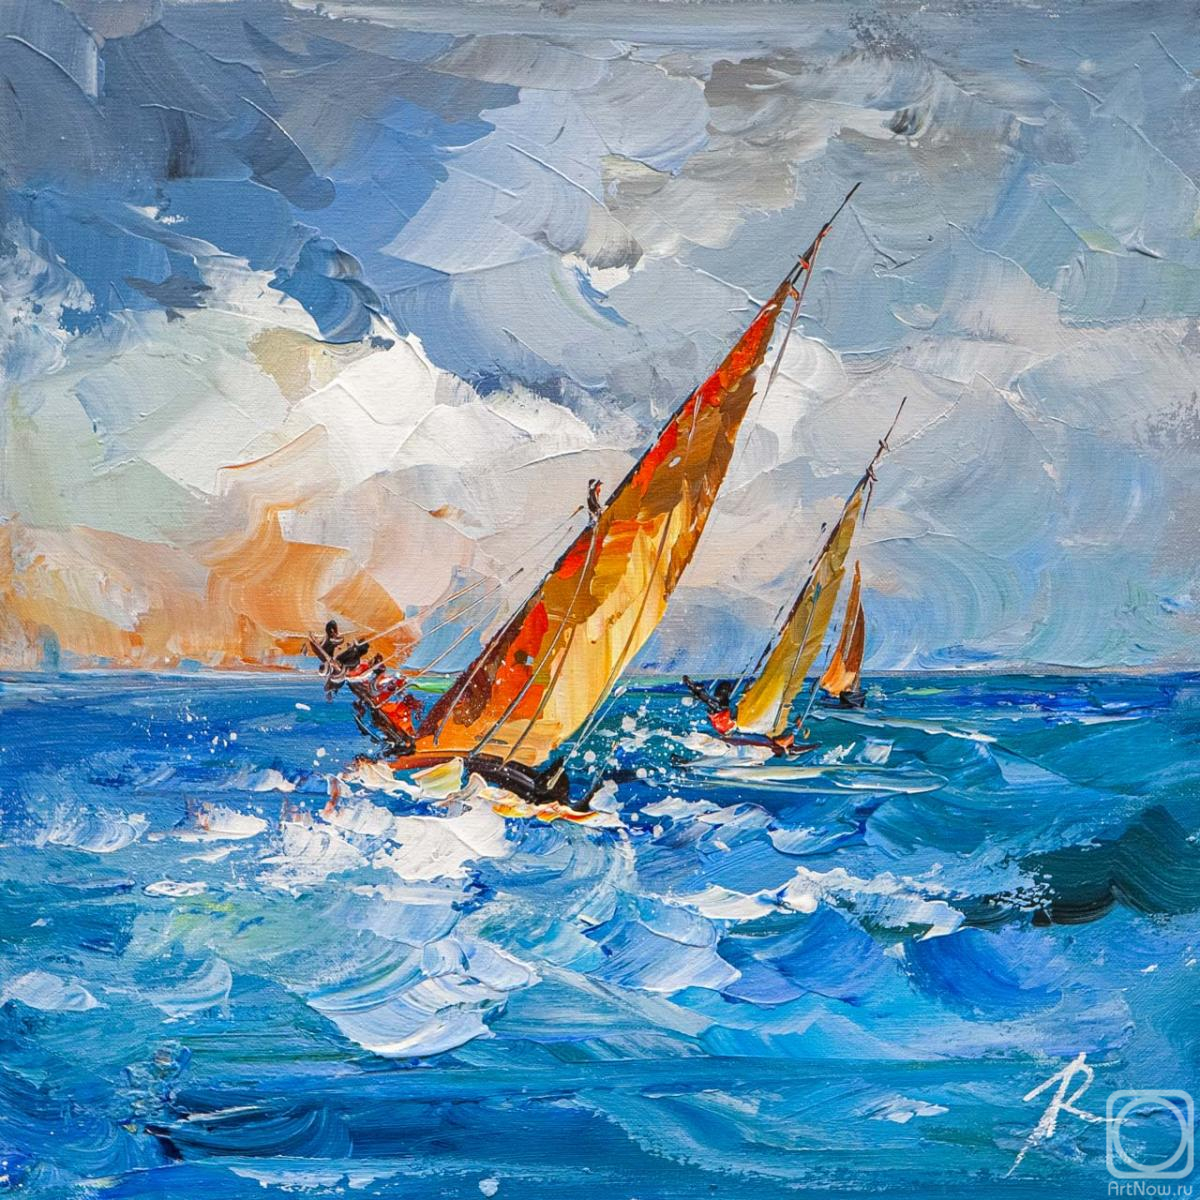 Rodries Jose. Bright sails in the blue sea